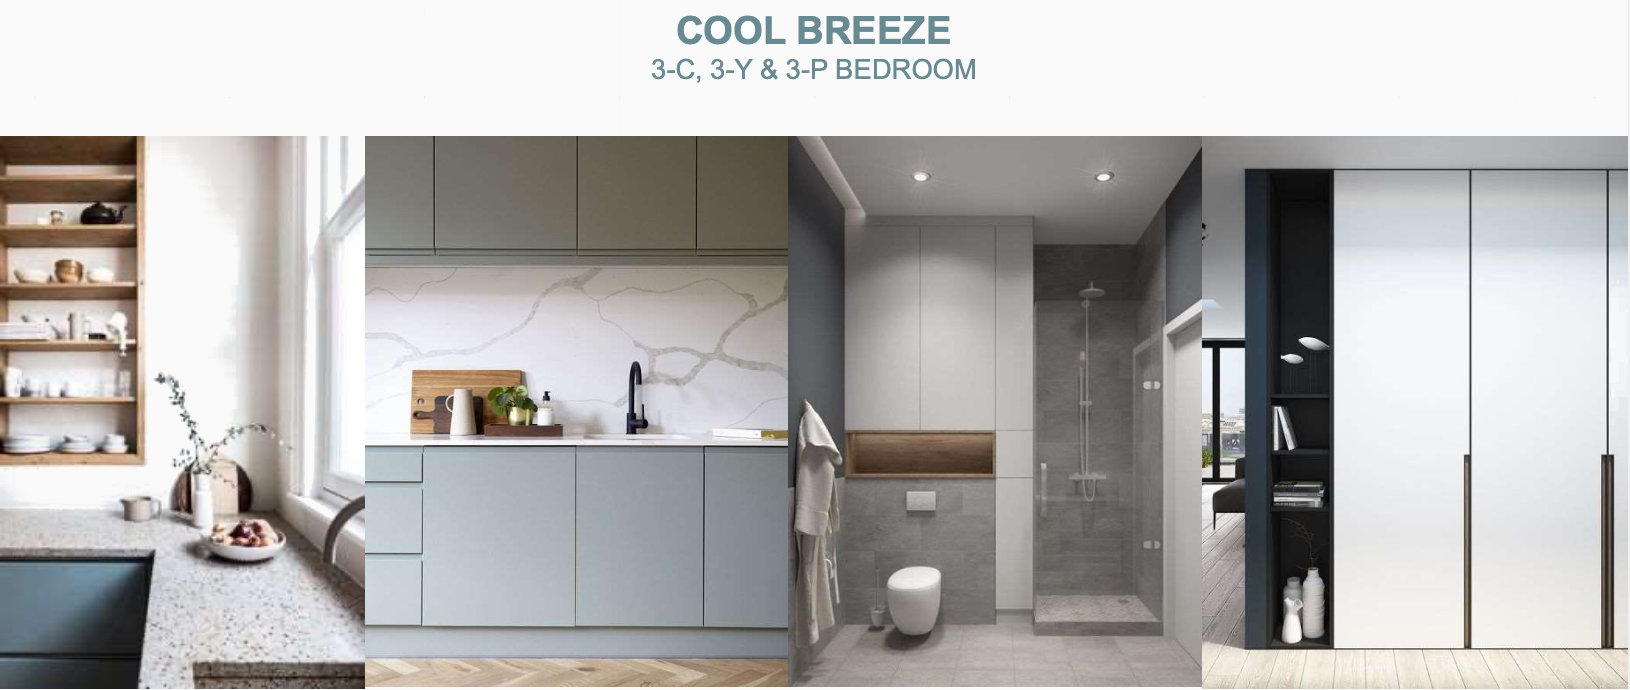 New Yishun EC . Cool Breeze Colour Scheme for 3 Bedroom Units